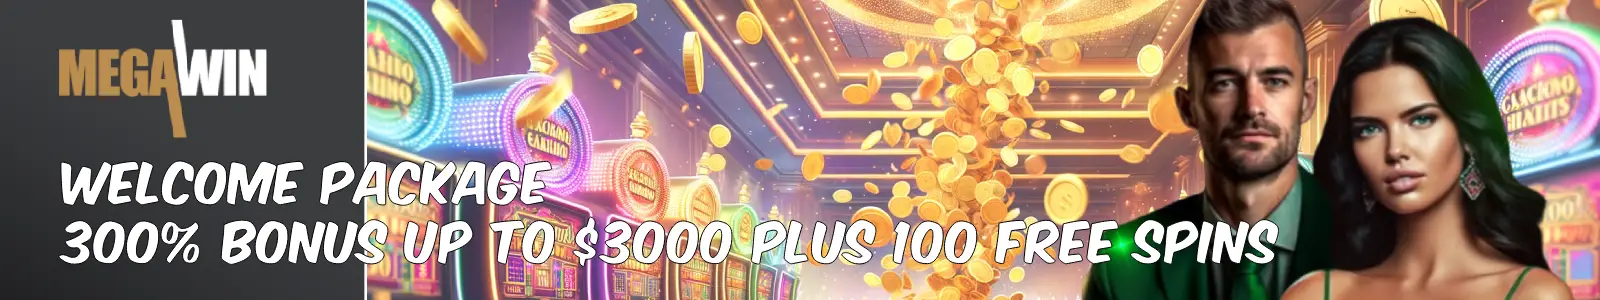 megawin casino welcome bonus